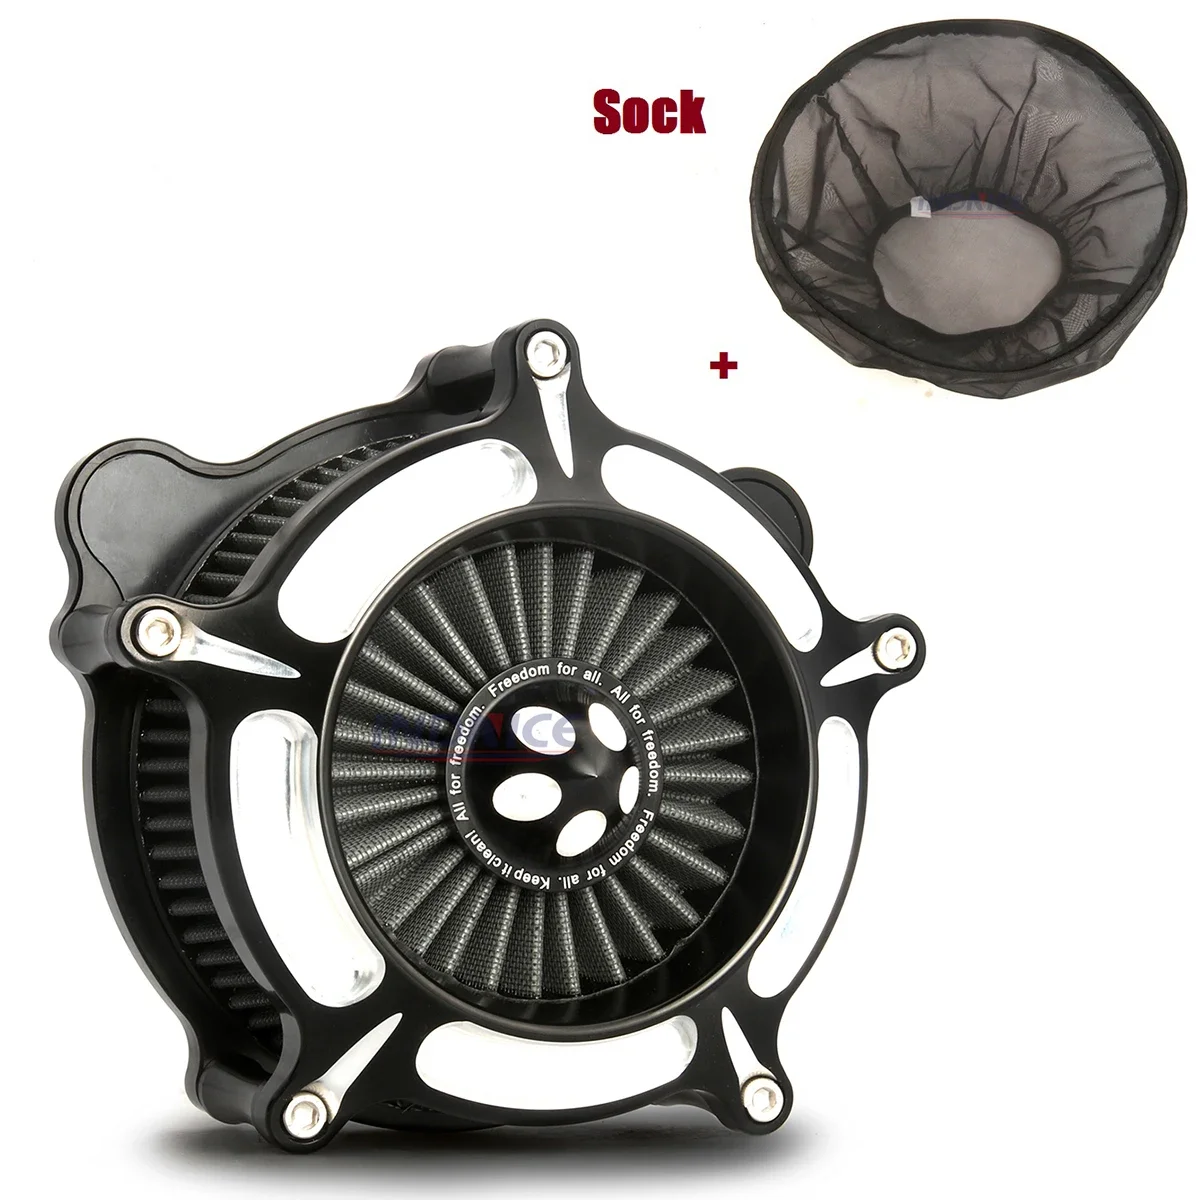 

Rain sock for Motorcycle Turbine Spike Air Cleaner intake filter For harley Touring street Glide 08-16 black air intake